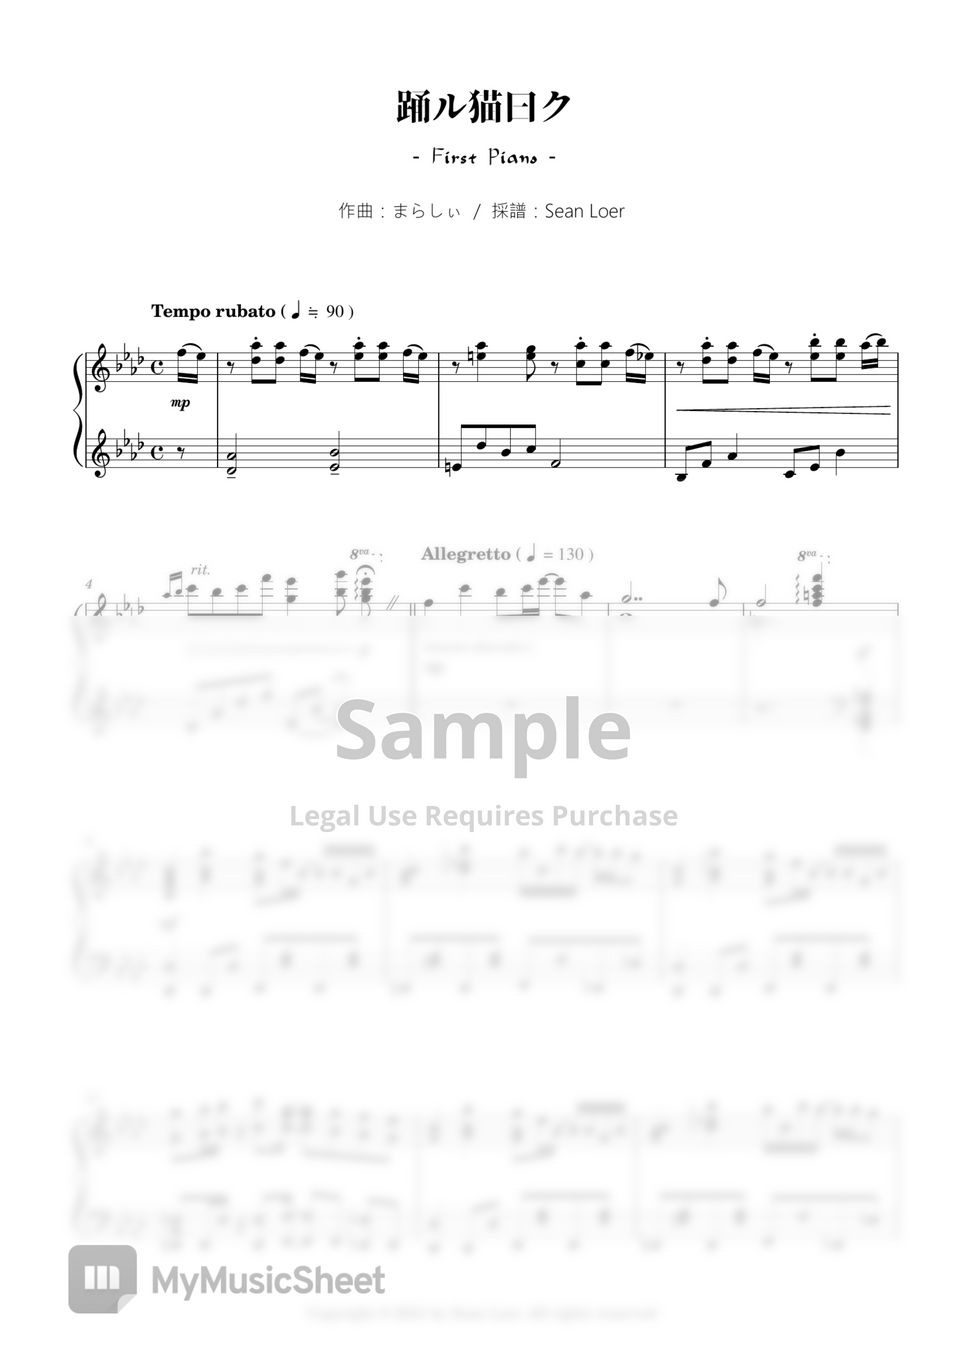 觸手猴 - 【觸手猴】 舞貓之心 (踊ル猫⽈ク) [First Piano] by Sean Loer